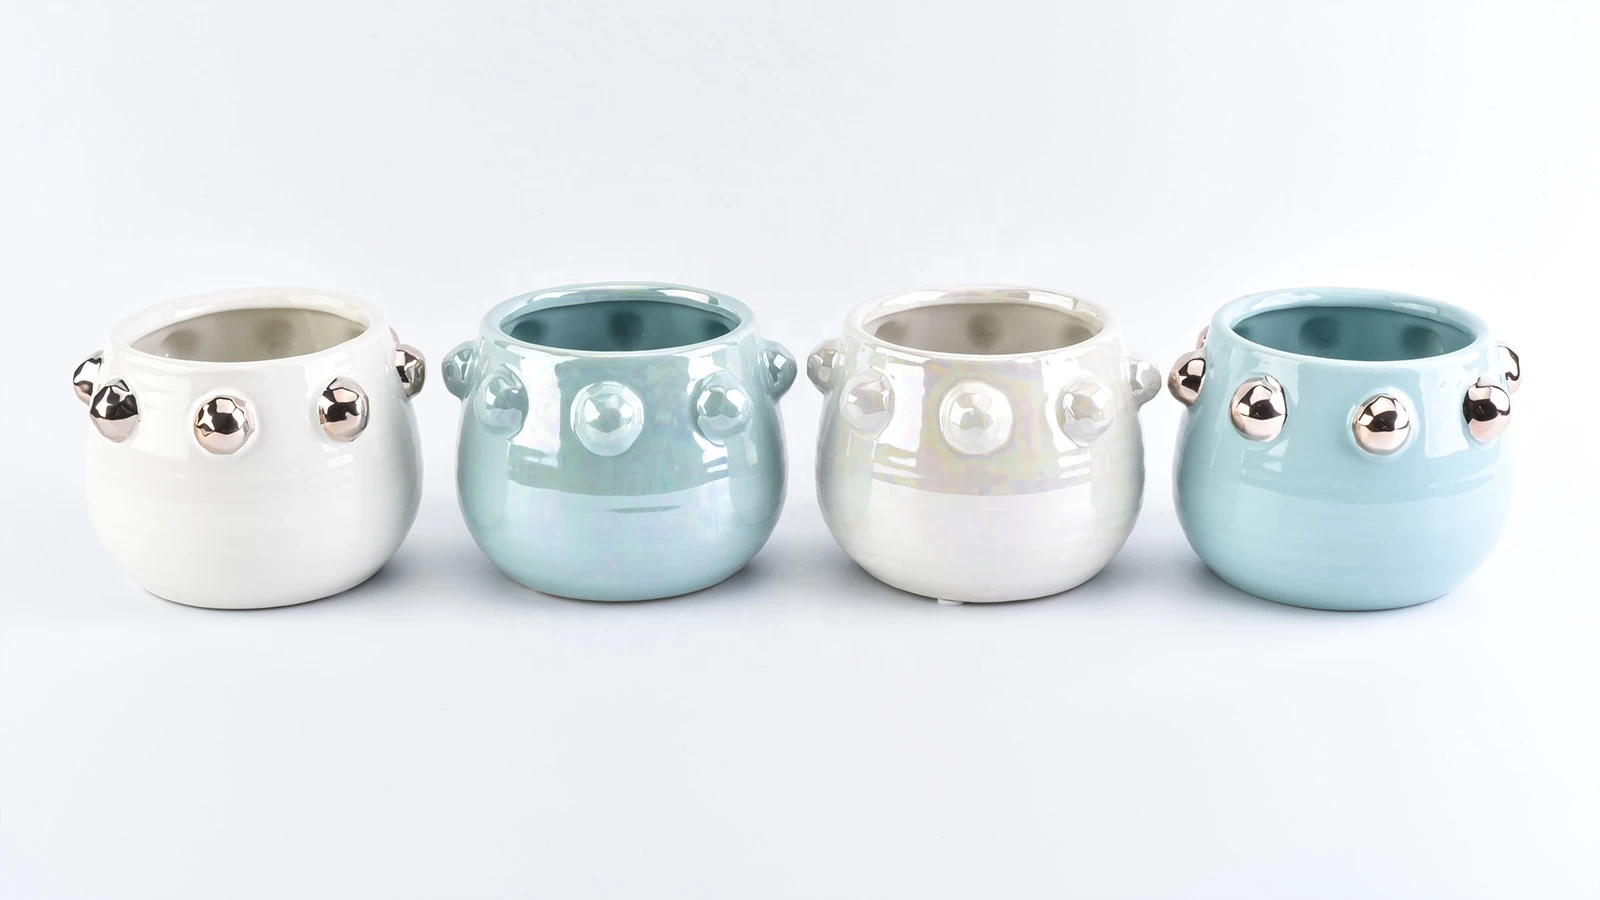 unique ceramic candle vessels iridescent jar wholesale